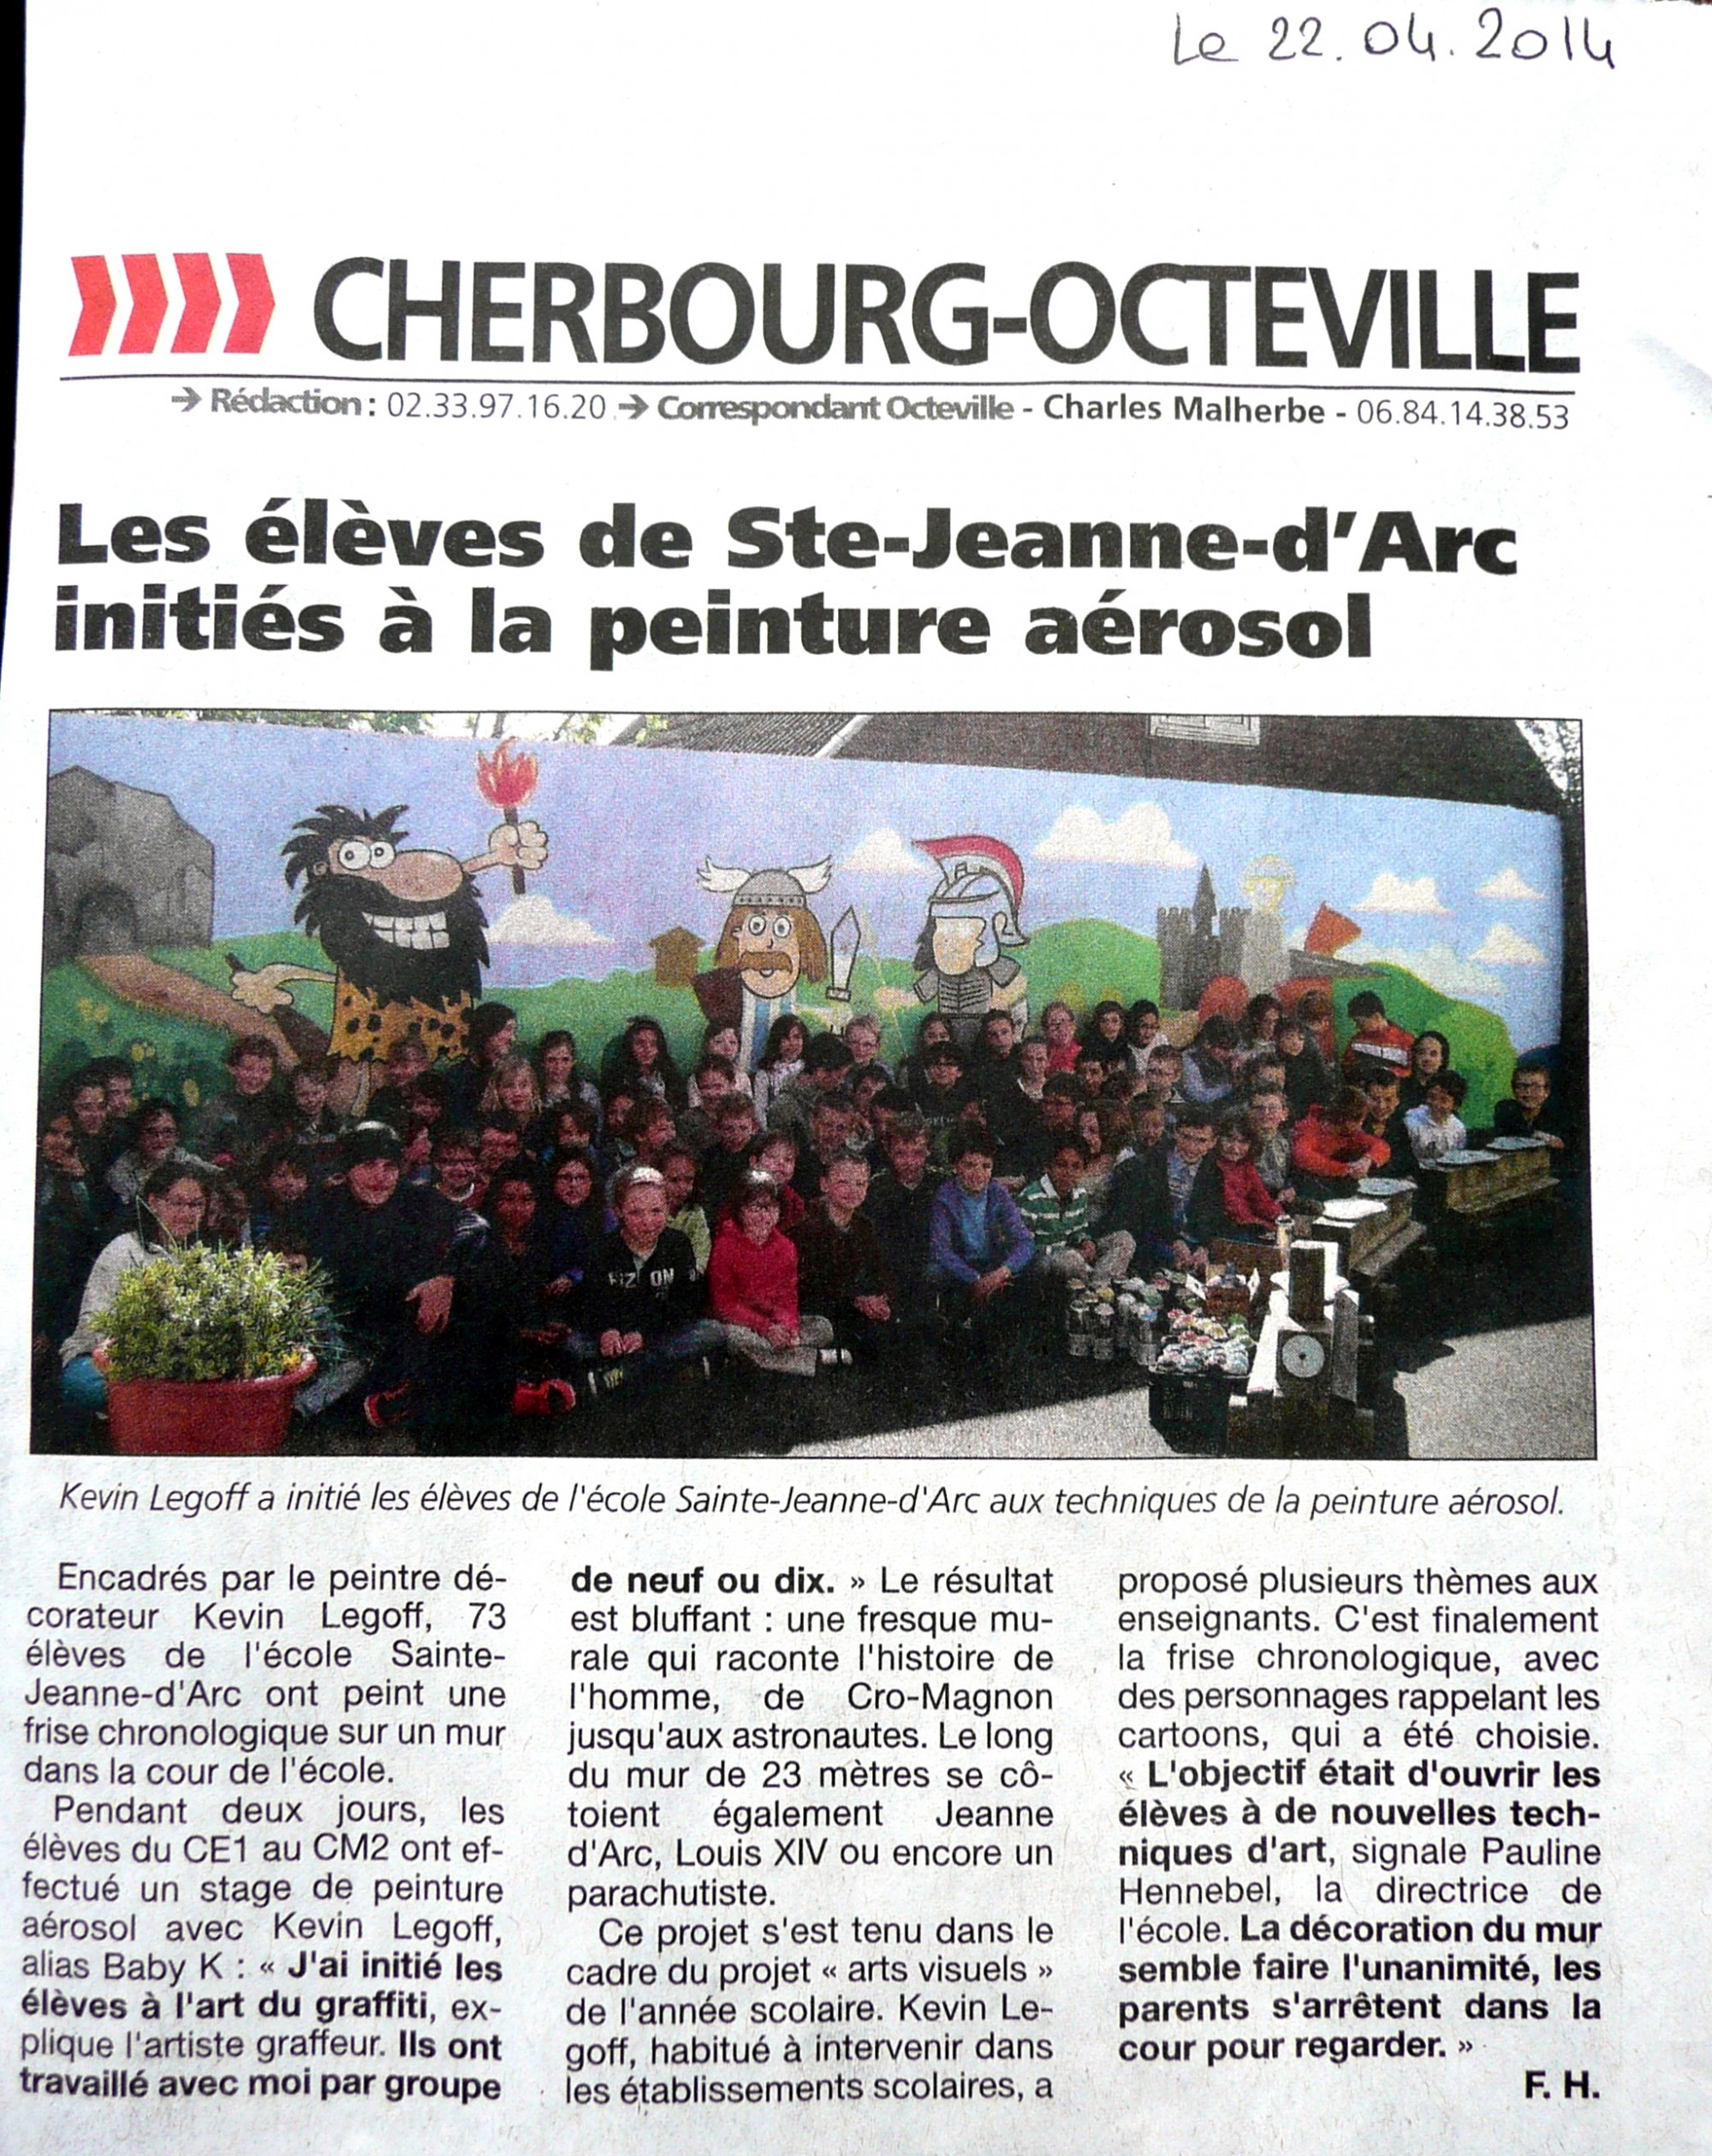 Cherbourg octeville 2014